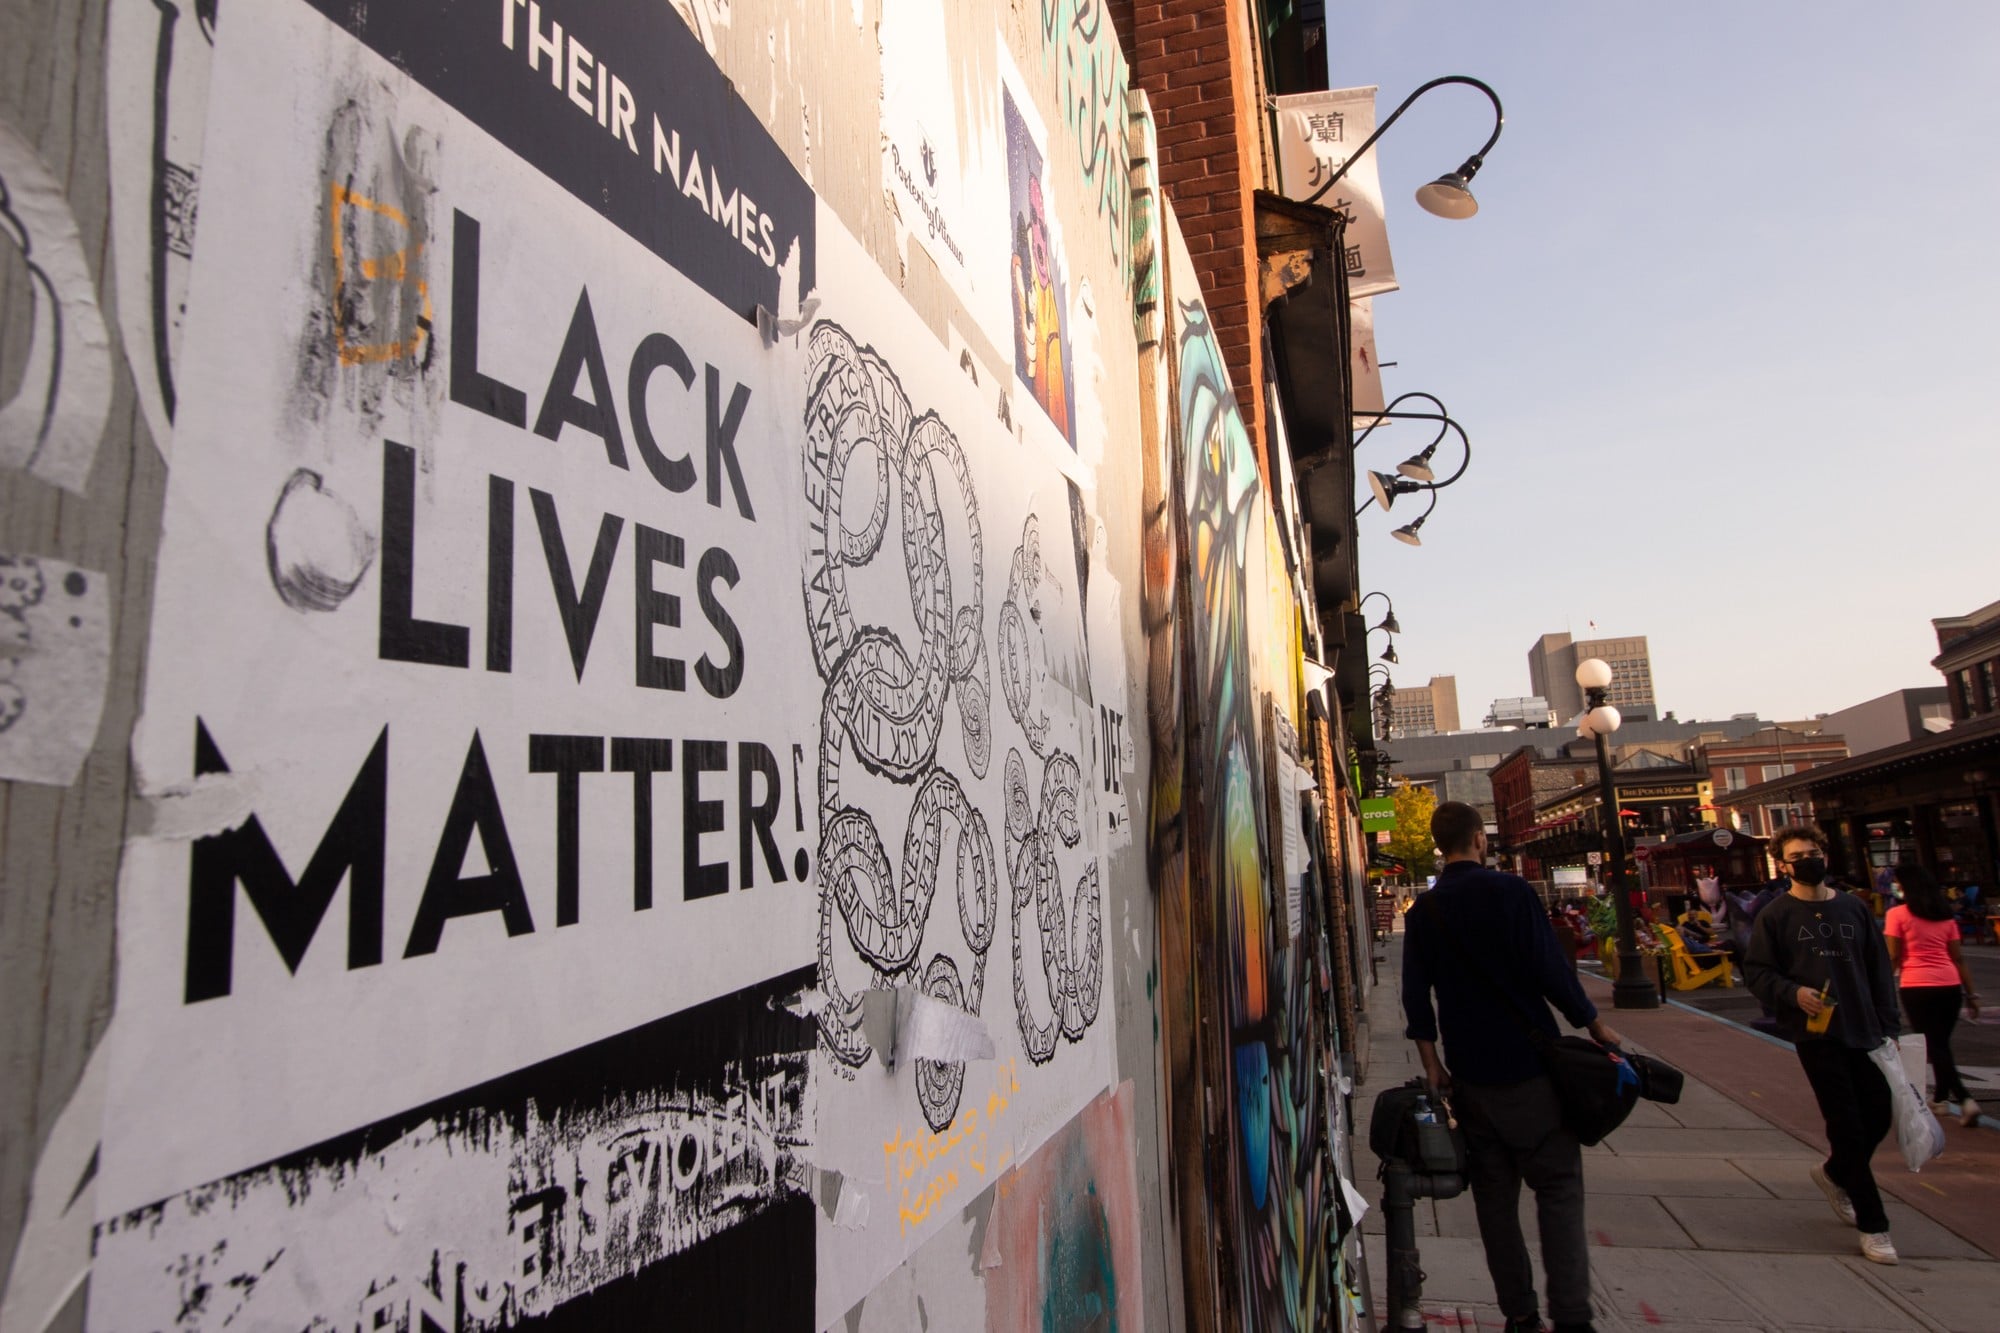 William Street downtown Byward Market features Black Lives Matter art.